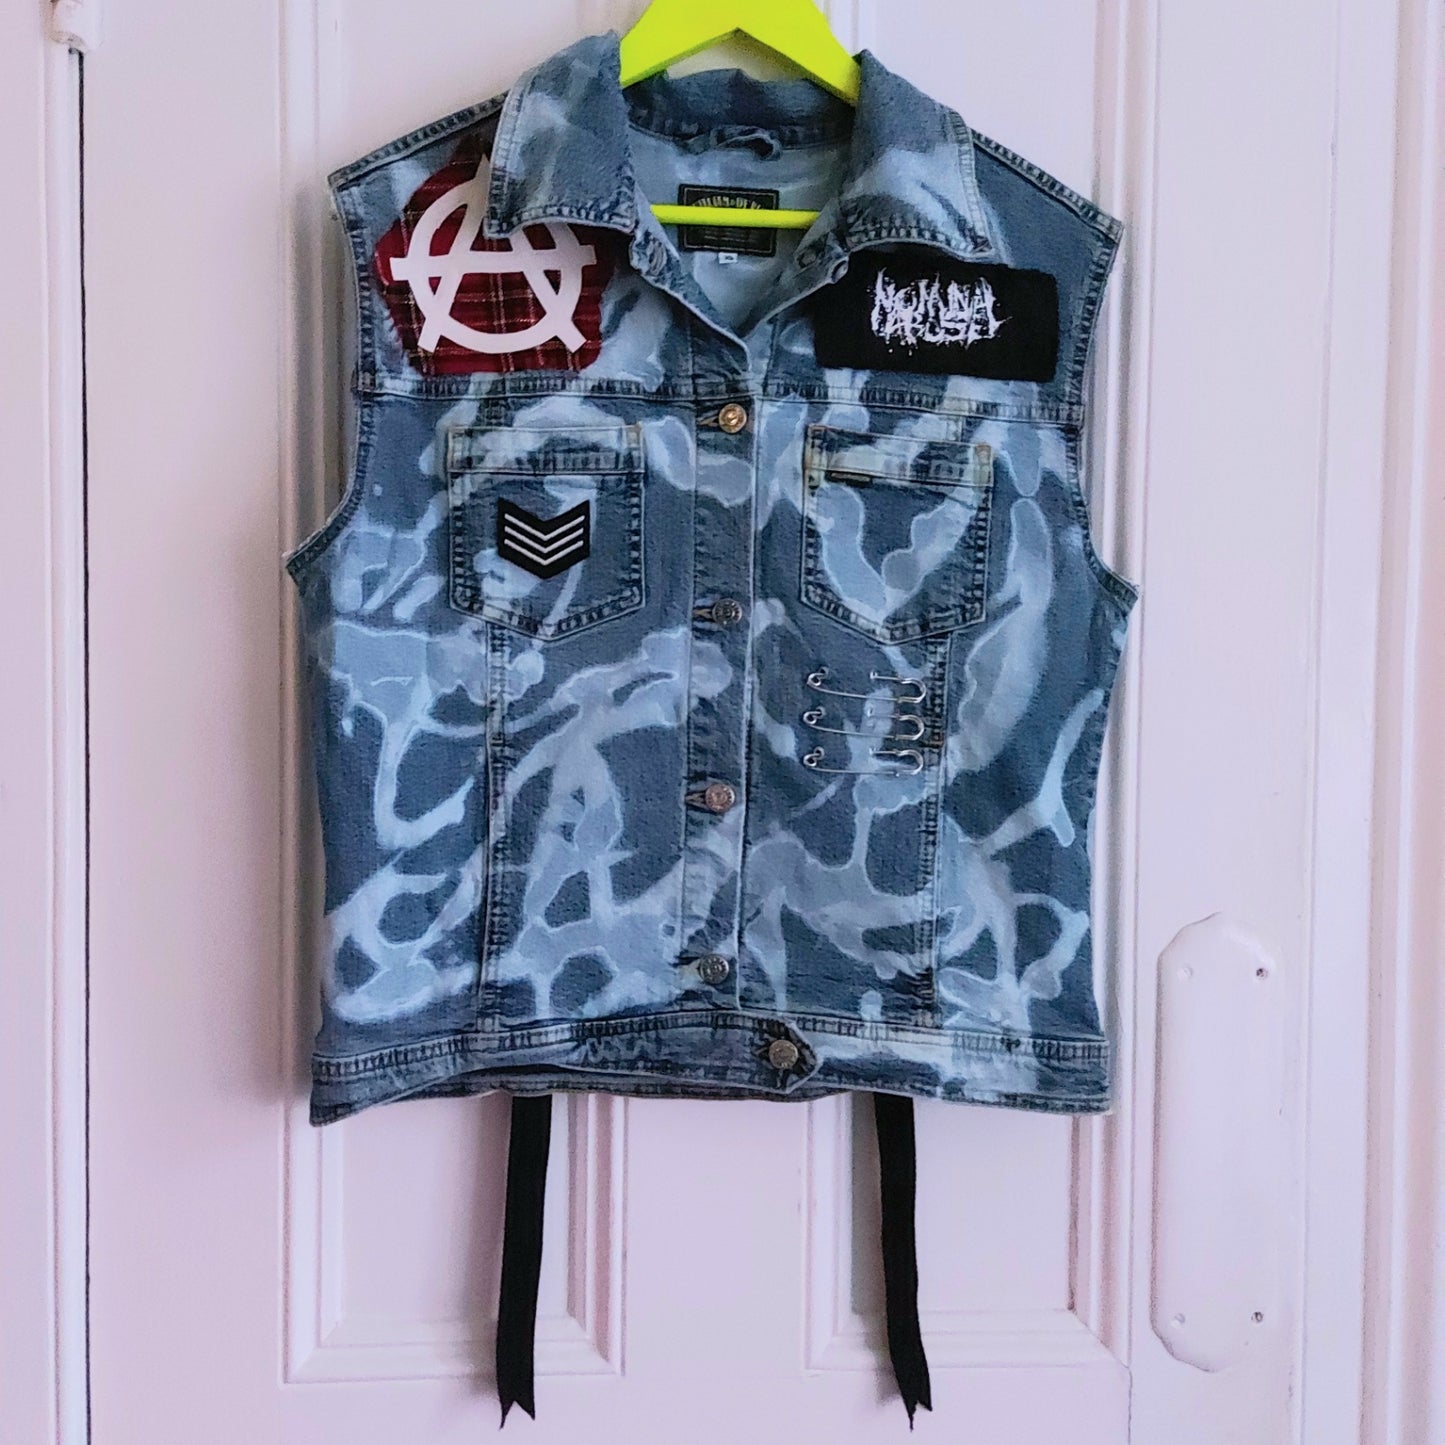 Anarchy Punk Denim Battle Waistcoat - Size XL